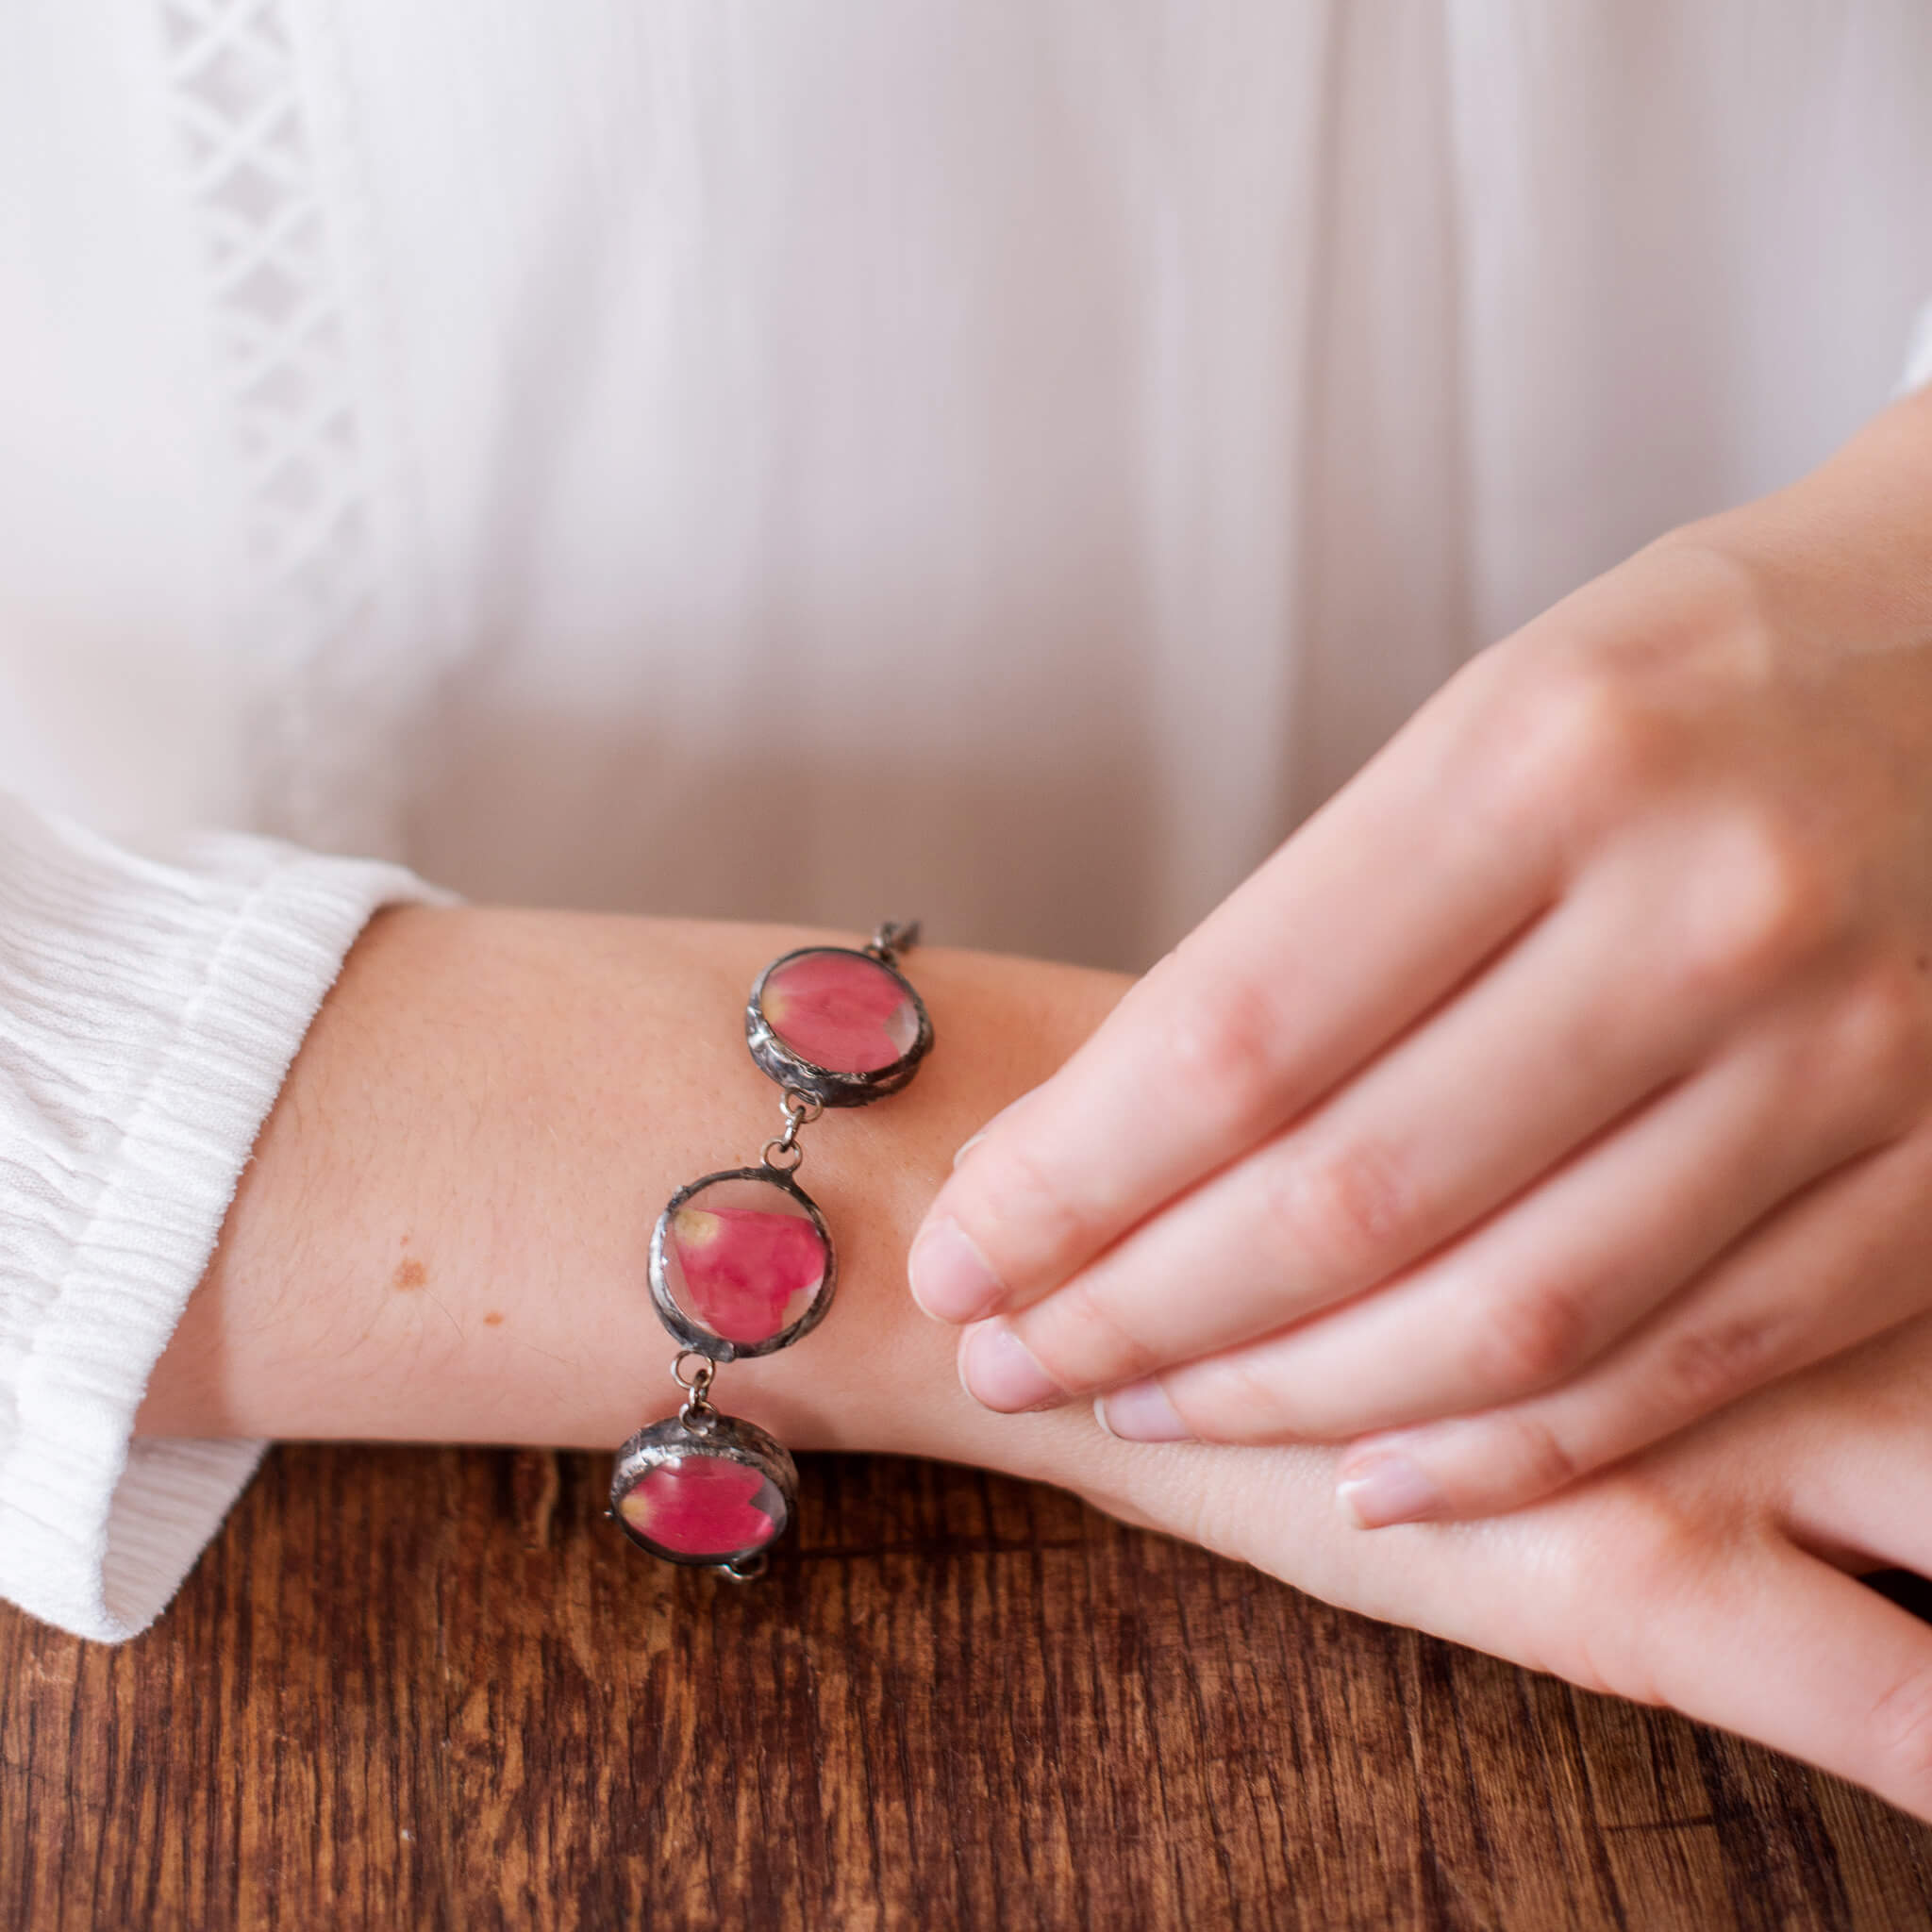 Pressed rose petal bracelet on a wrist